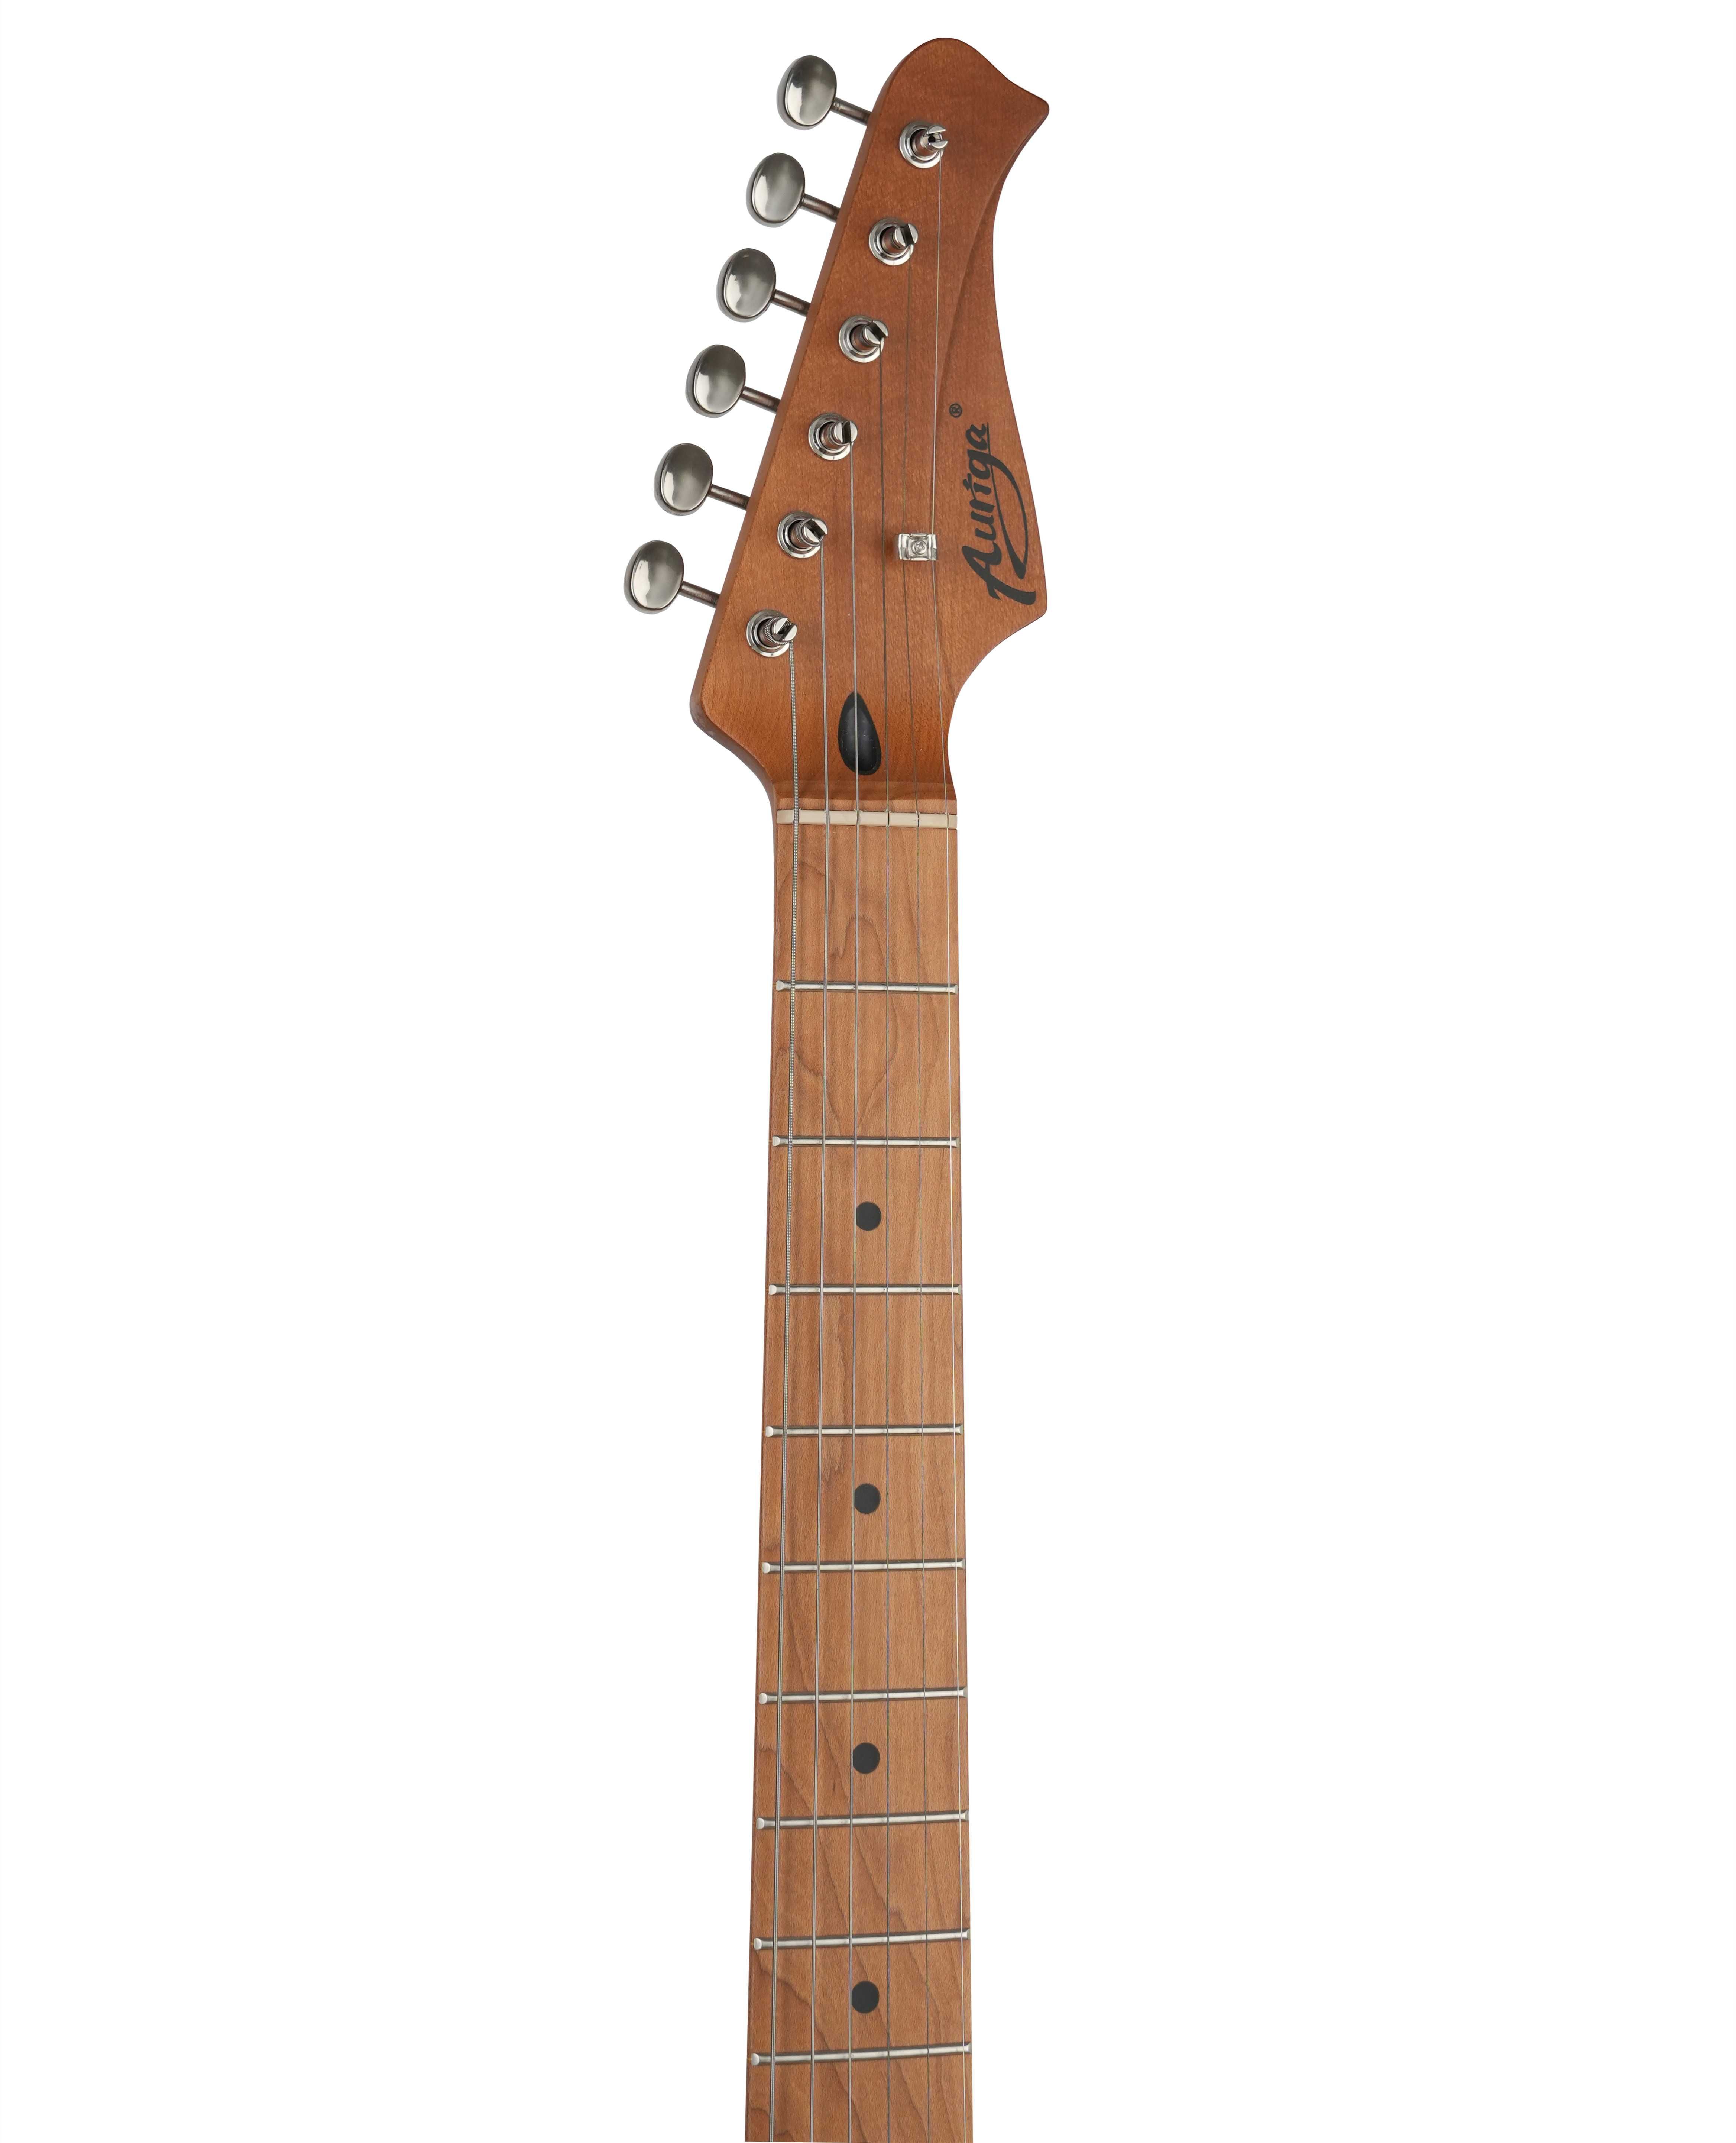 AURIGA A 220 PK Stratocaster Gitara Elektryczna